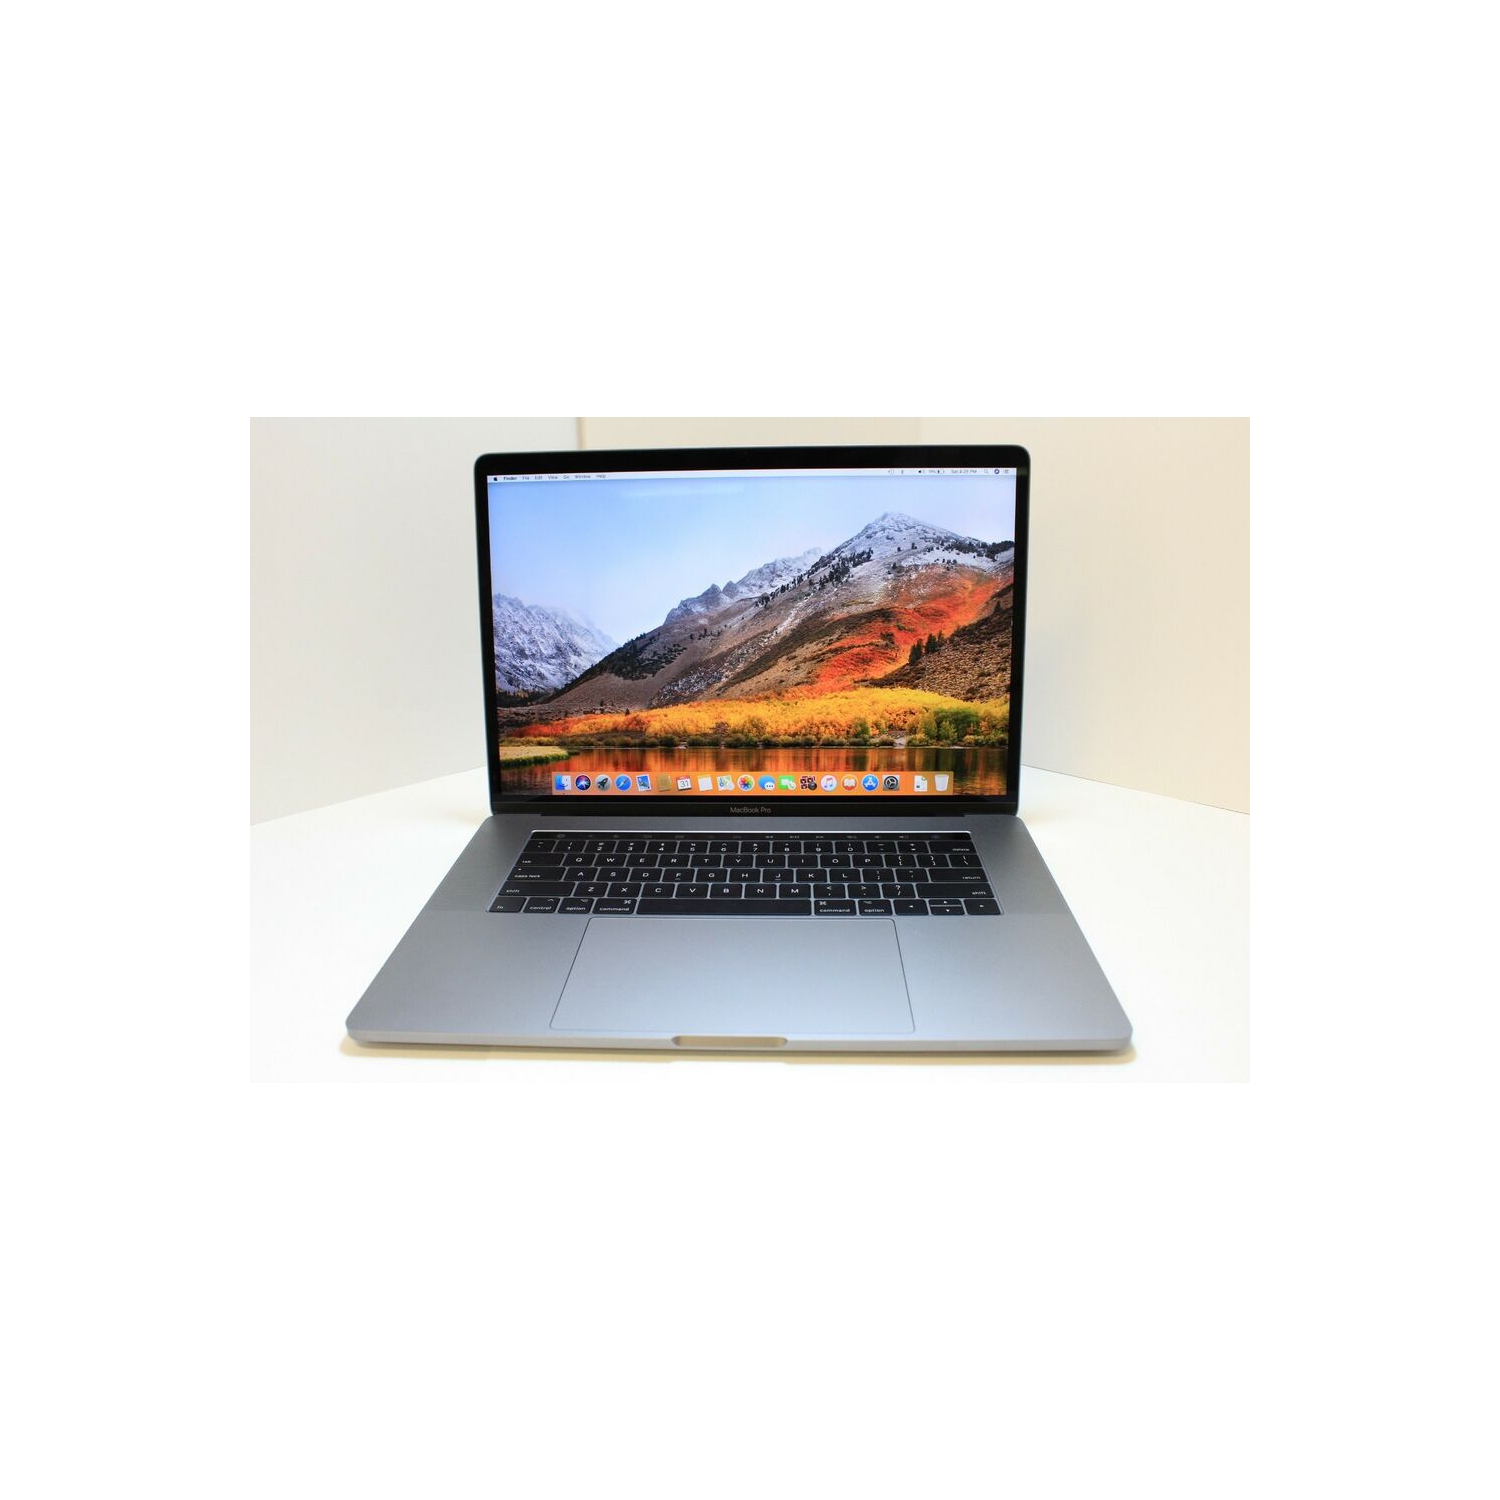 Refurbished (Excellent) - Apple MacBook Pro Retina 15"W/TOUCHBAR A1707 Intel Core i7-7920HQ CPU @ 3.10GHz 16GB 512GB SSD macOS